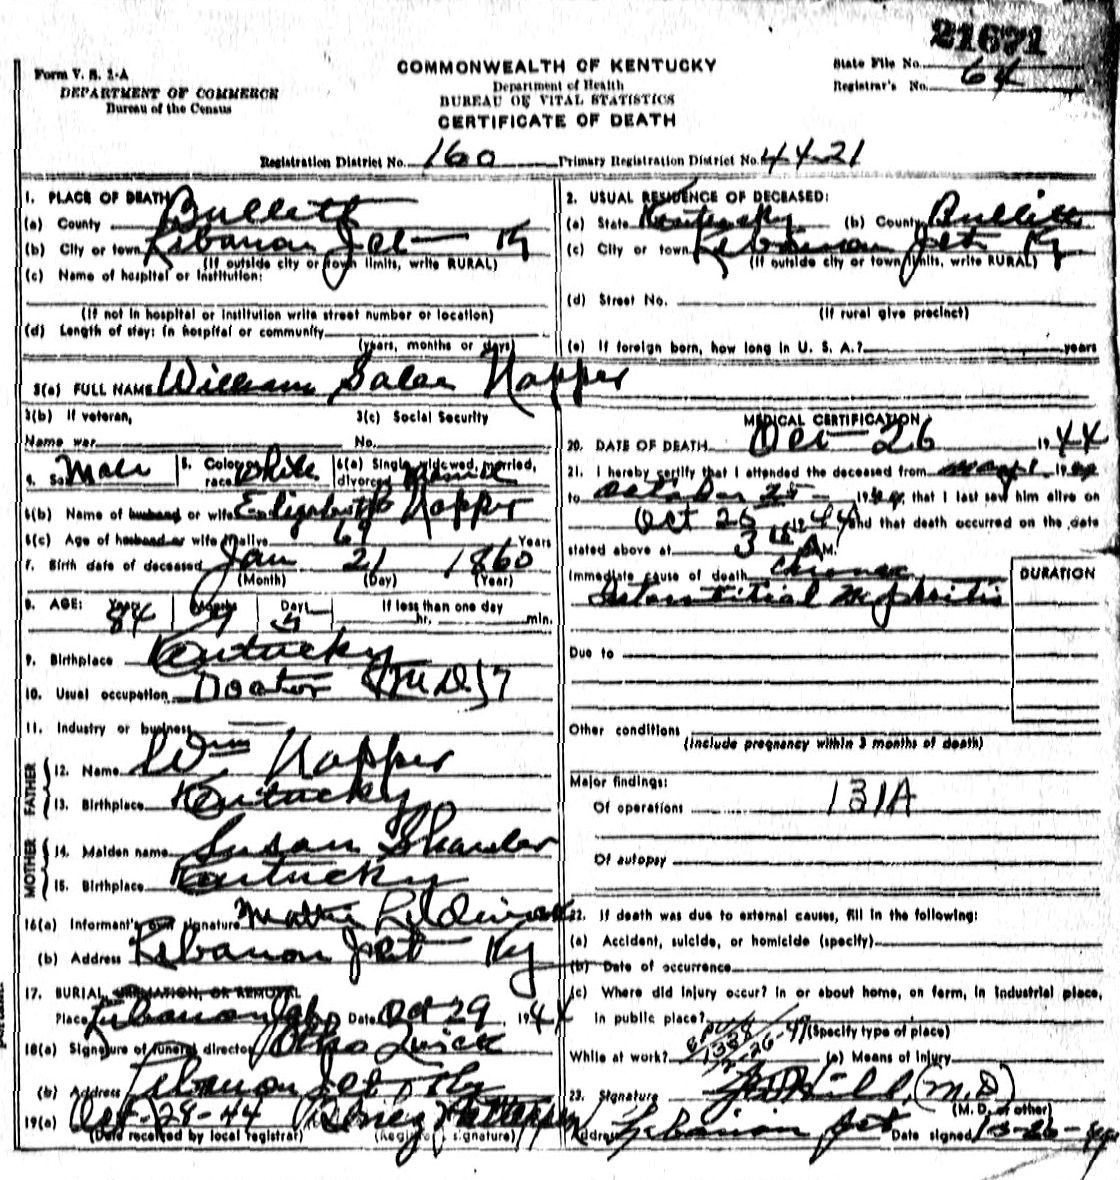 Dr. William S. Napper Death Certificate